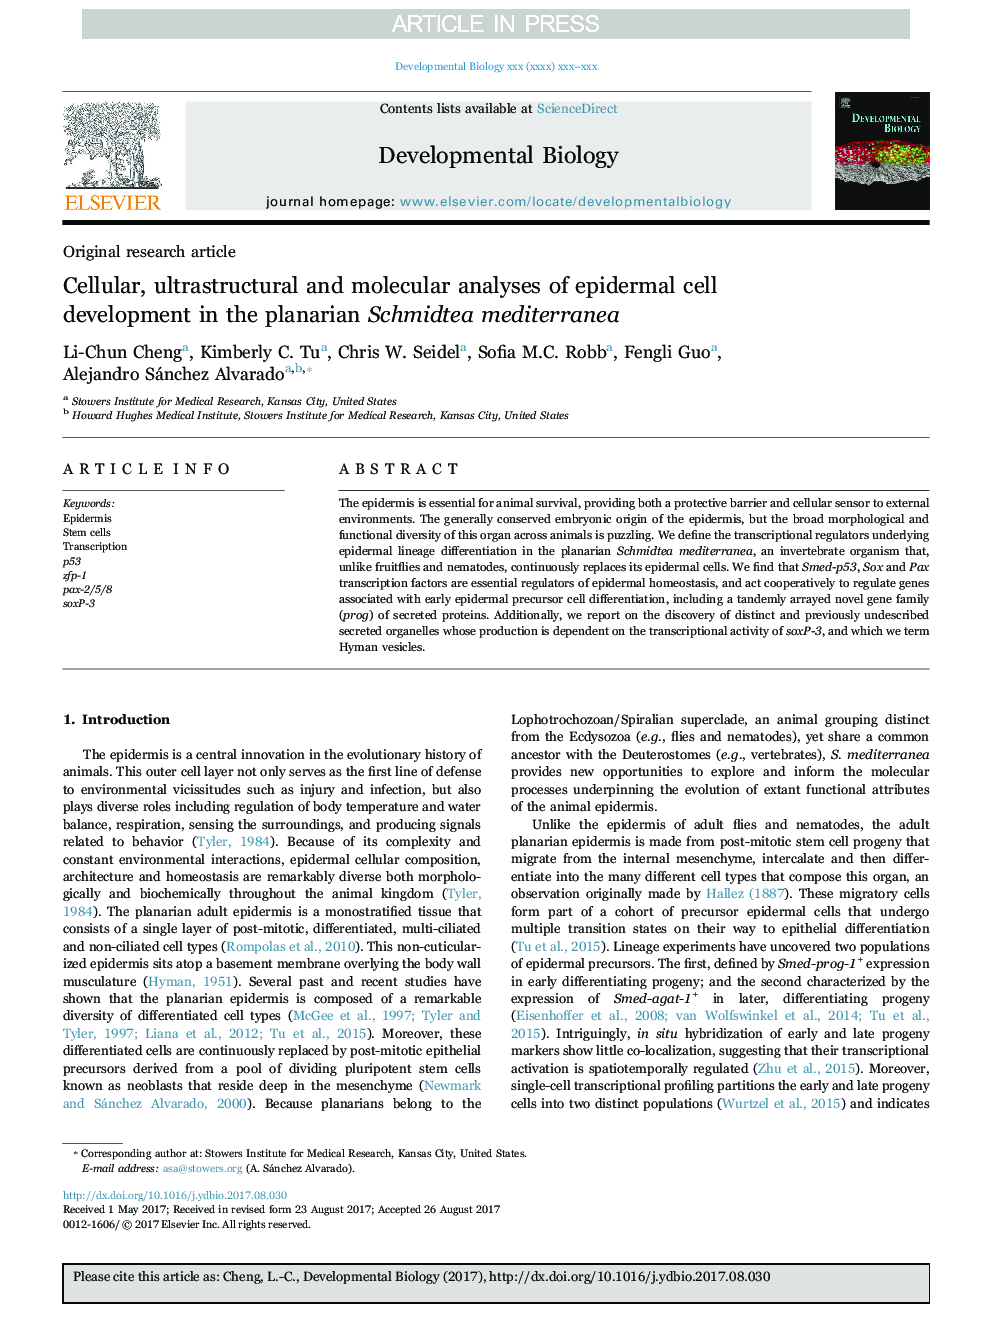 Cellular, ultrastructural and molecular analyses of epidermal cell development in the planarian Schmidtea mediterranea